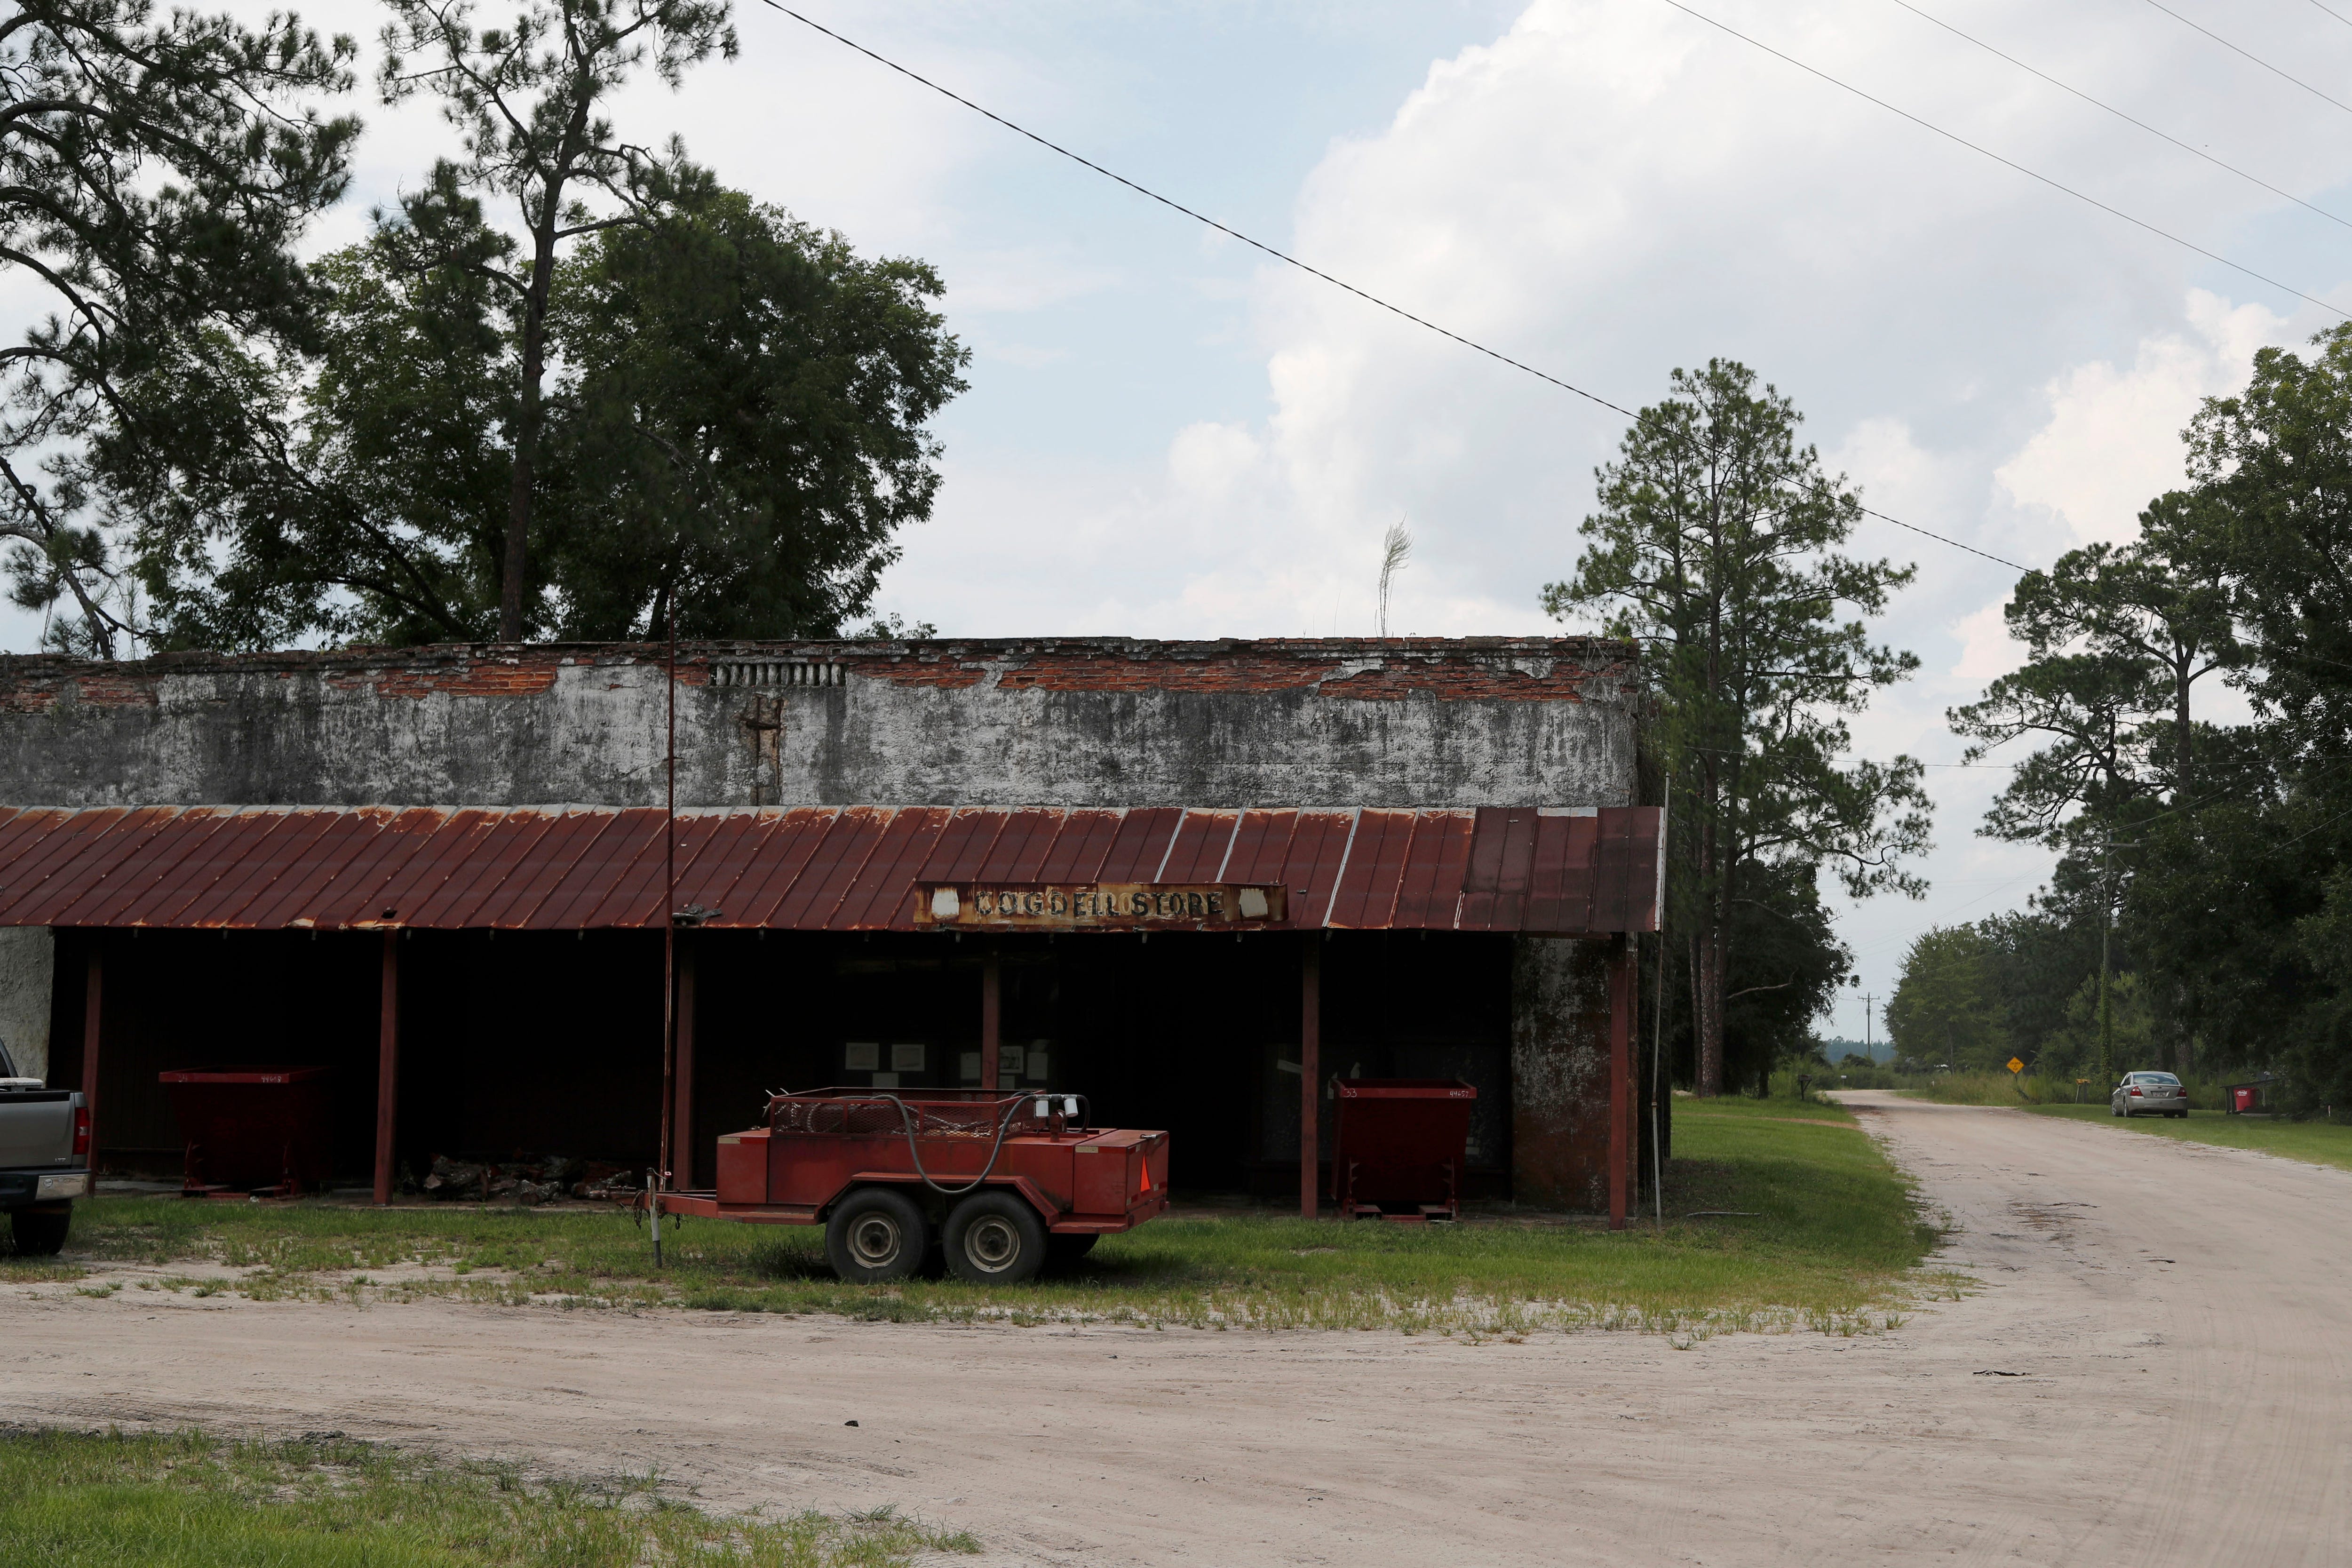 Georgia senator used farm labor contractors linked to trafficking case